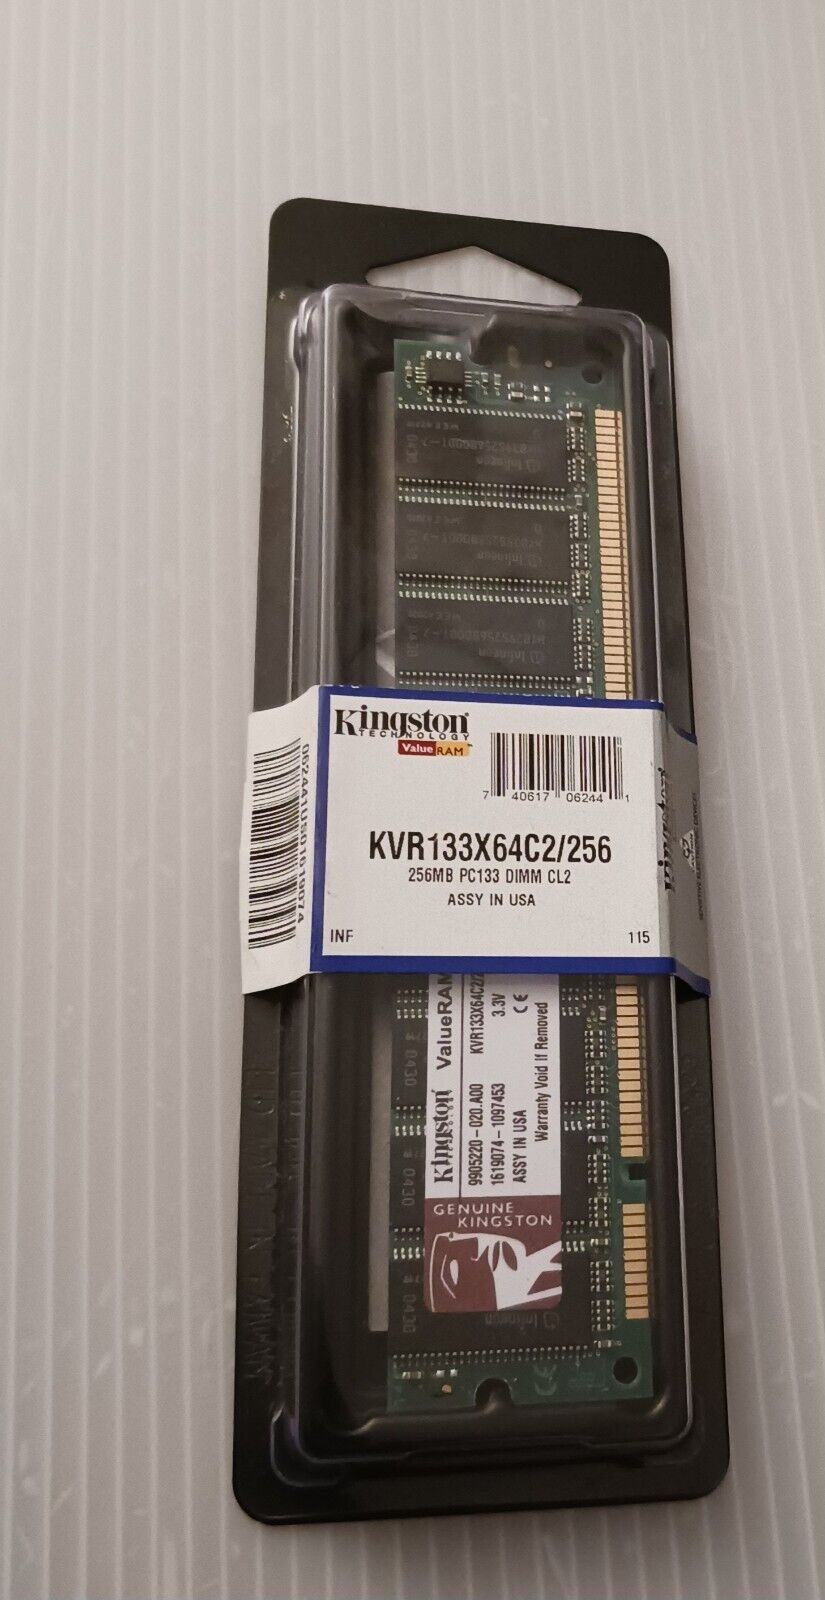 Kingston KVR133X64C2/256 (256MB, SDRAM, 133MHz, 168-pin) Single-Sided RAM Memory